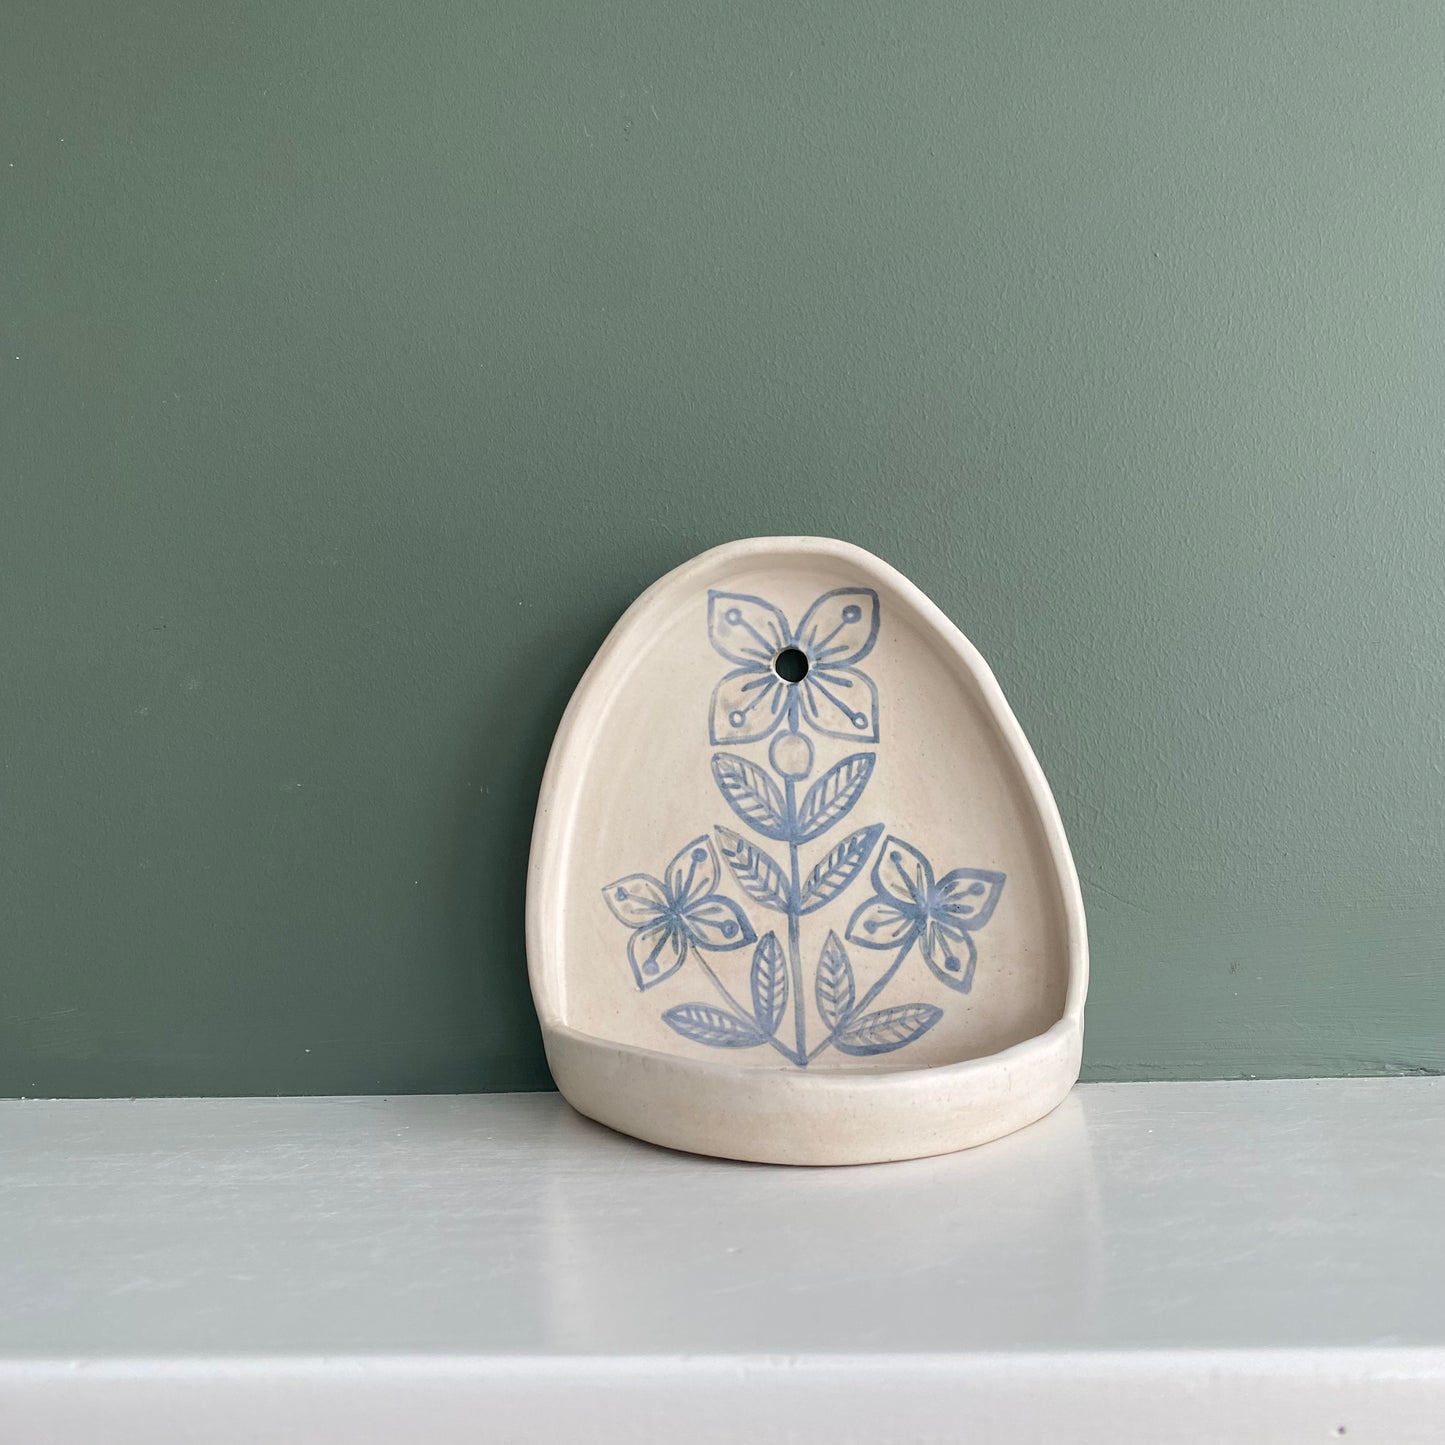 PRE ORDER Ceramic Wall Flower Design candle holder, light blue design with matt glaze candle sconce for votive or tea light candle